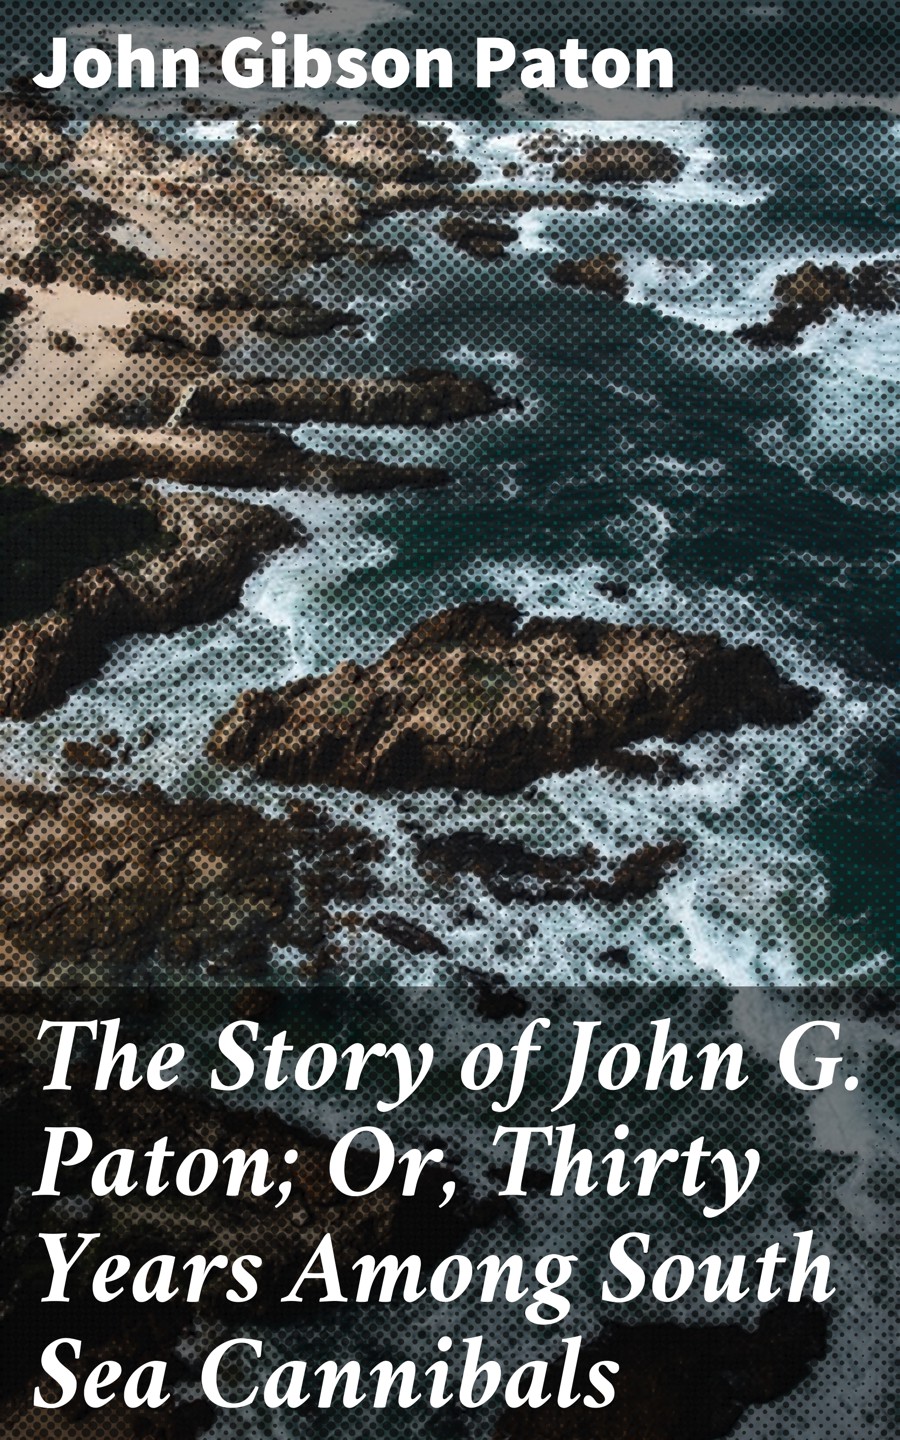 John Gibson Paton The Story of John G. Paton; Or, Thirty Years Among South Sea Cannibals